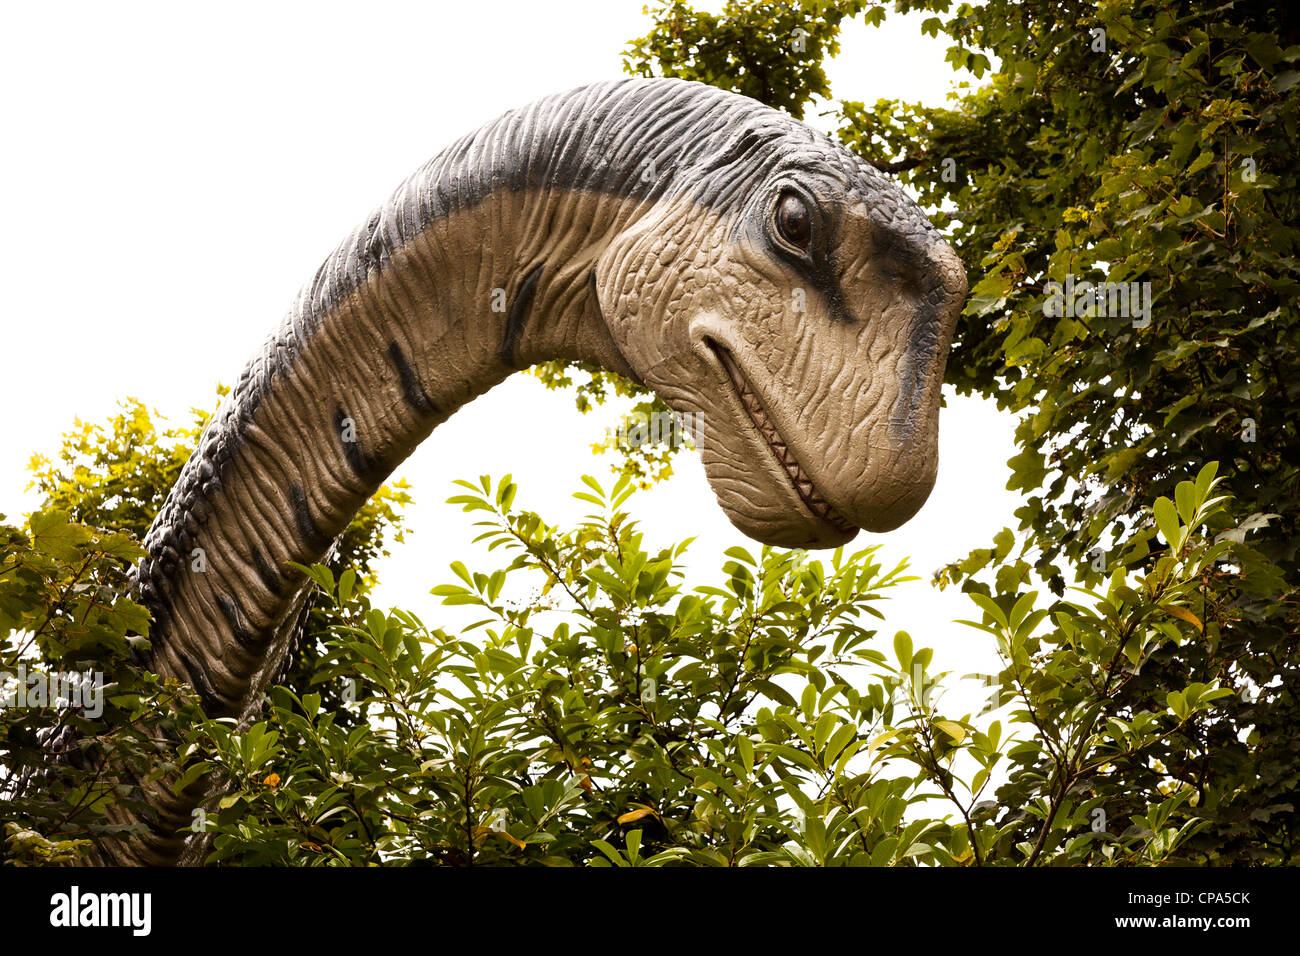 Apatosaurus in dinosaur park, Dan yr Ogof, Wales, UK Stock Photo